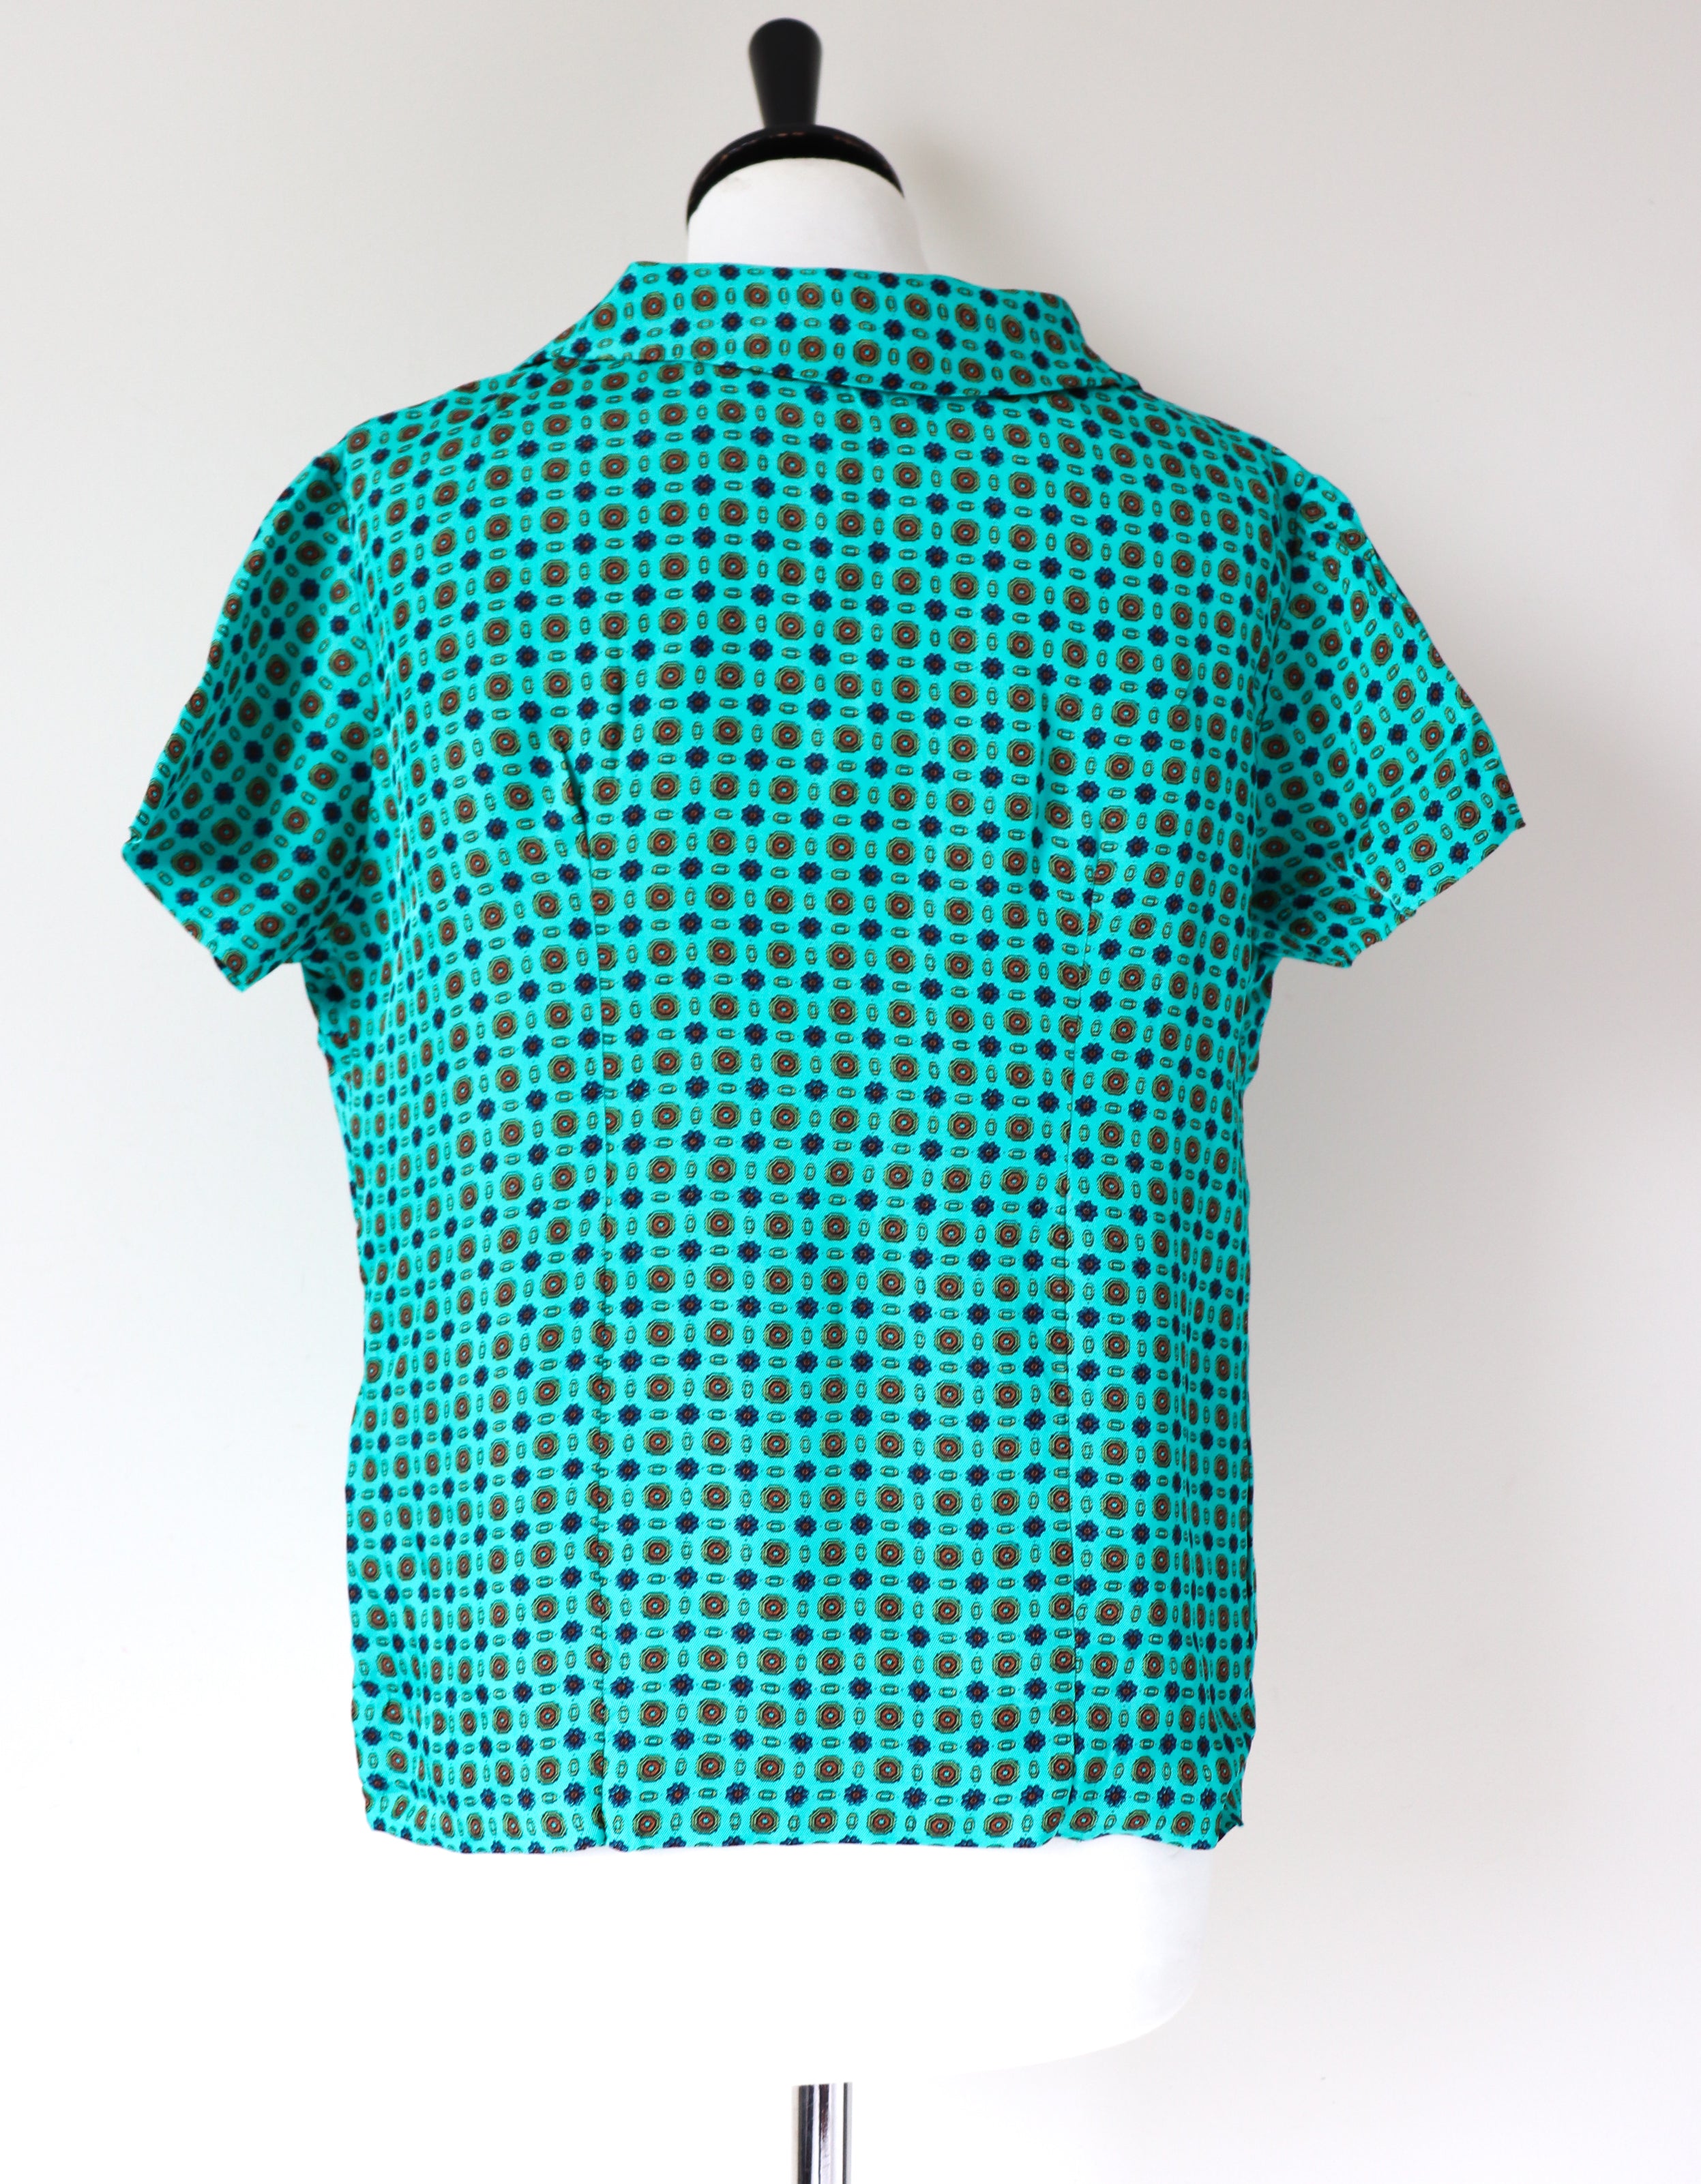 1960s Vintage Green Shell Top - Short Sleeves - Acetate - M / UK 12